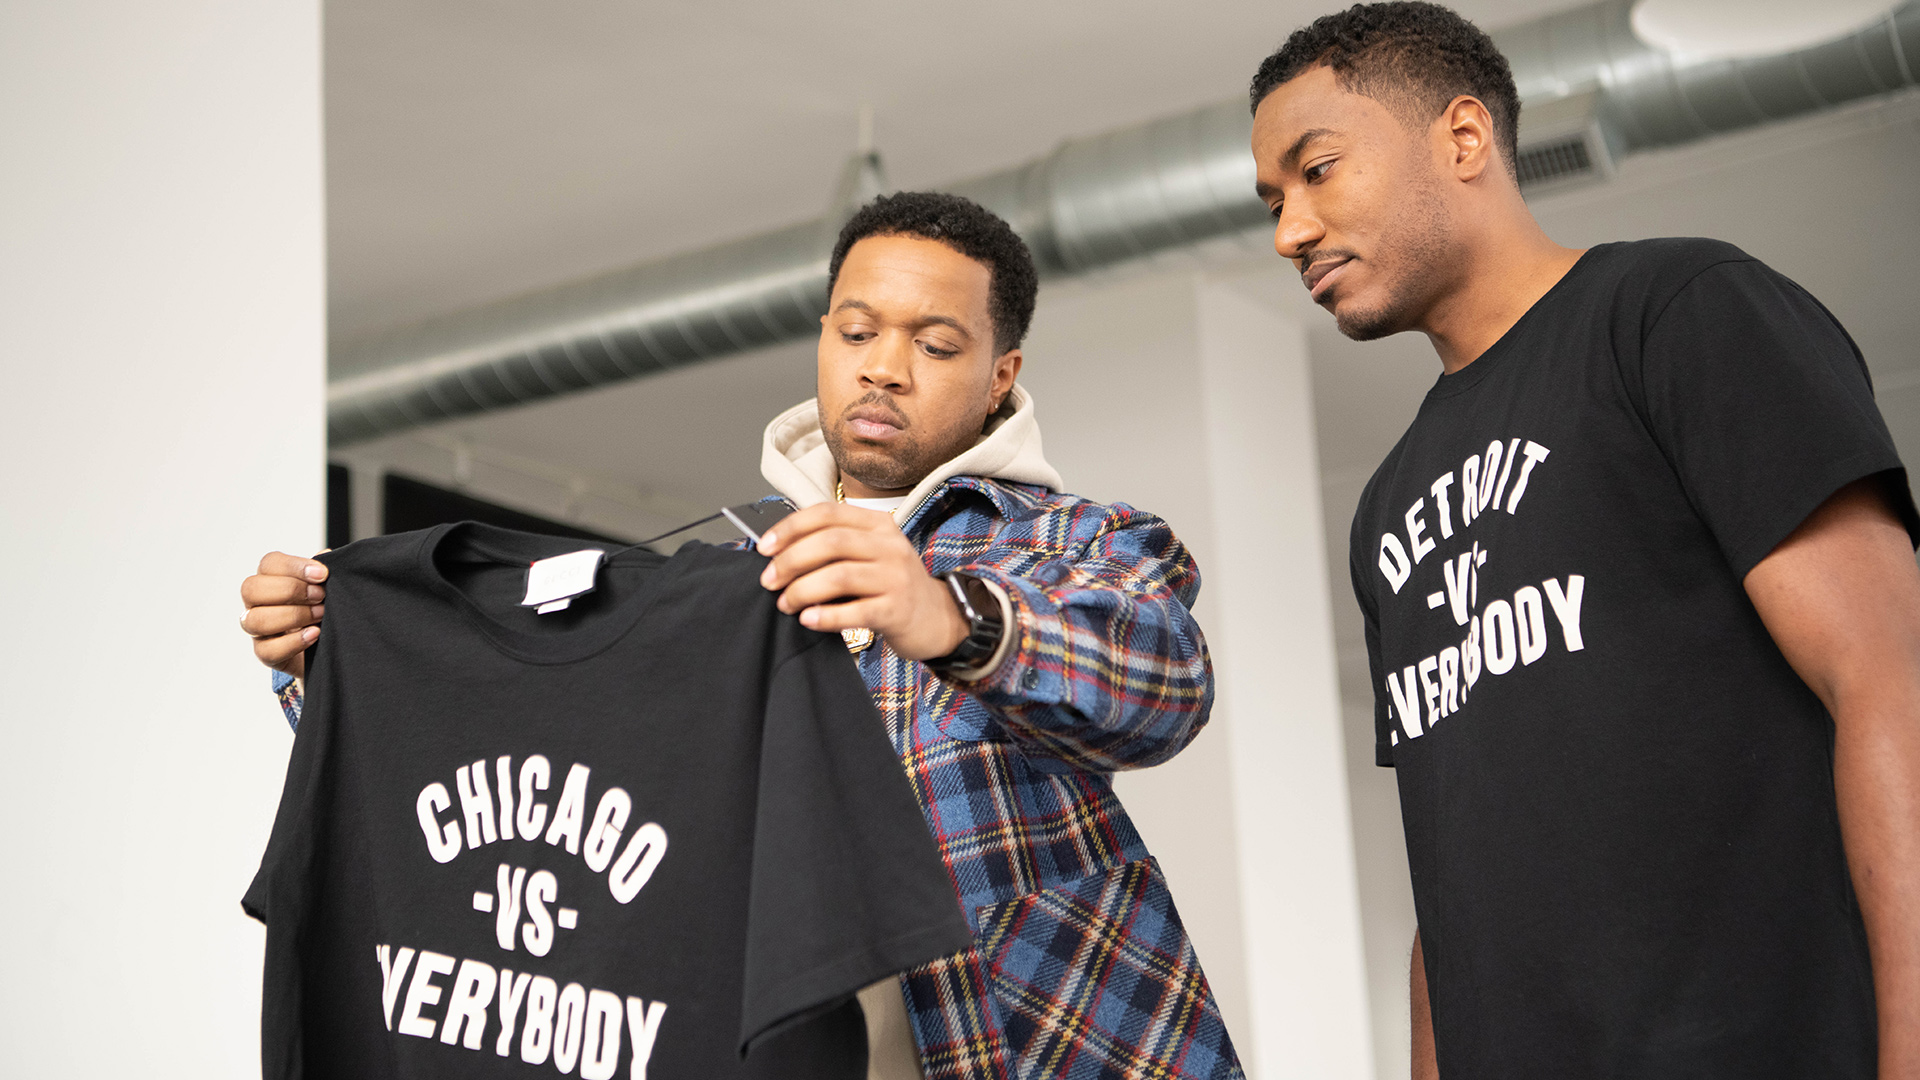 Gucci Chicago vs. Everybody T-Shirt Black